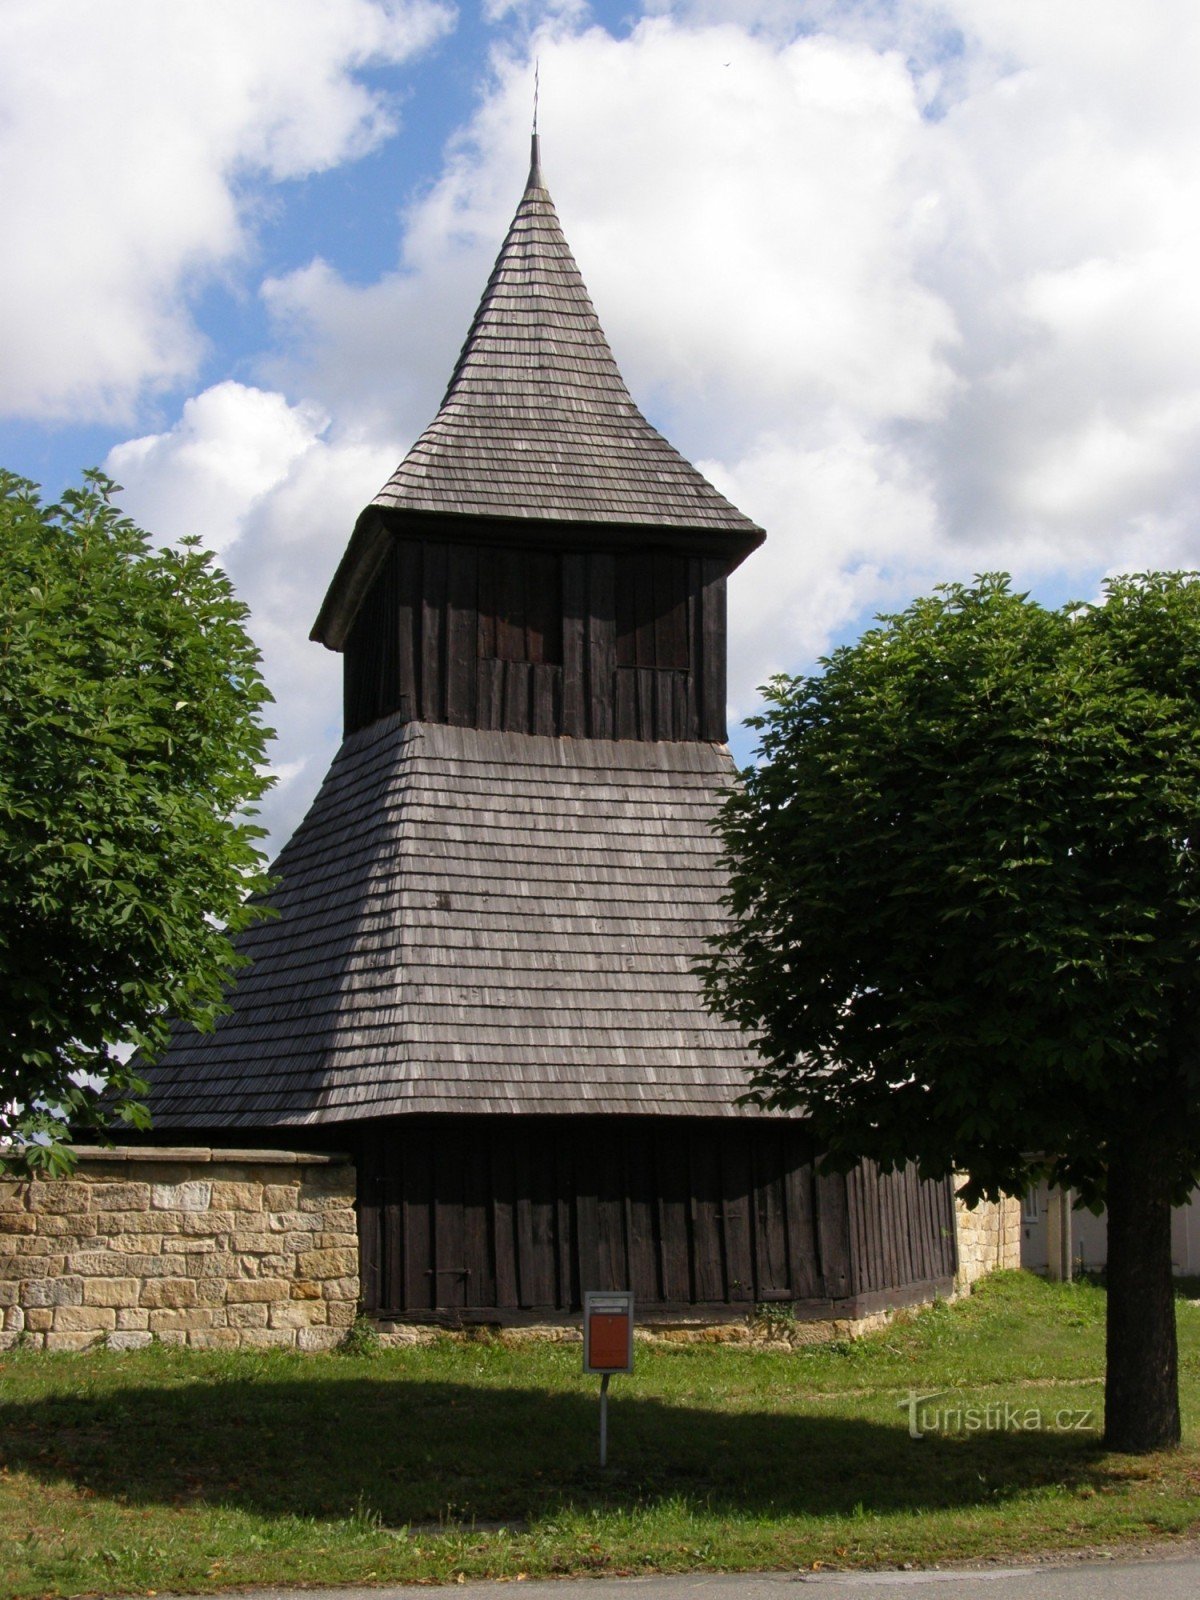 Vysočany - 圣木教堂有木制钟楼的市场